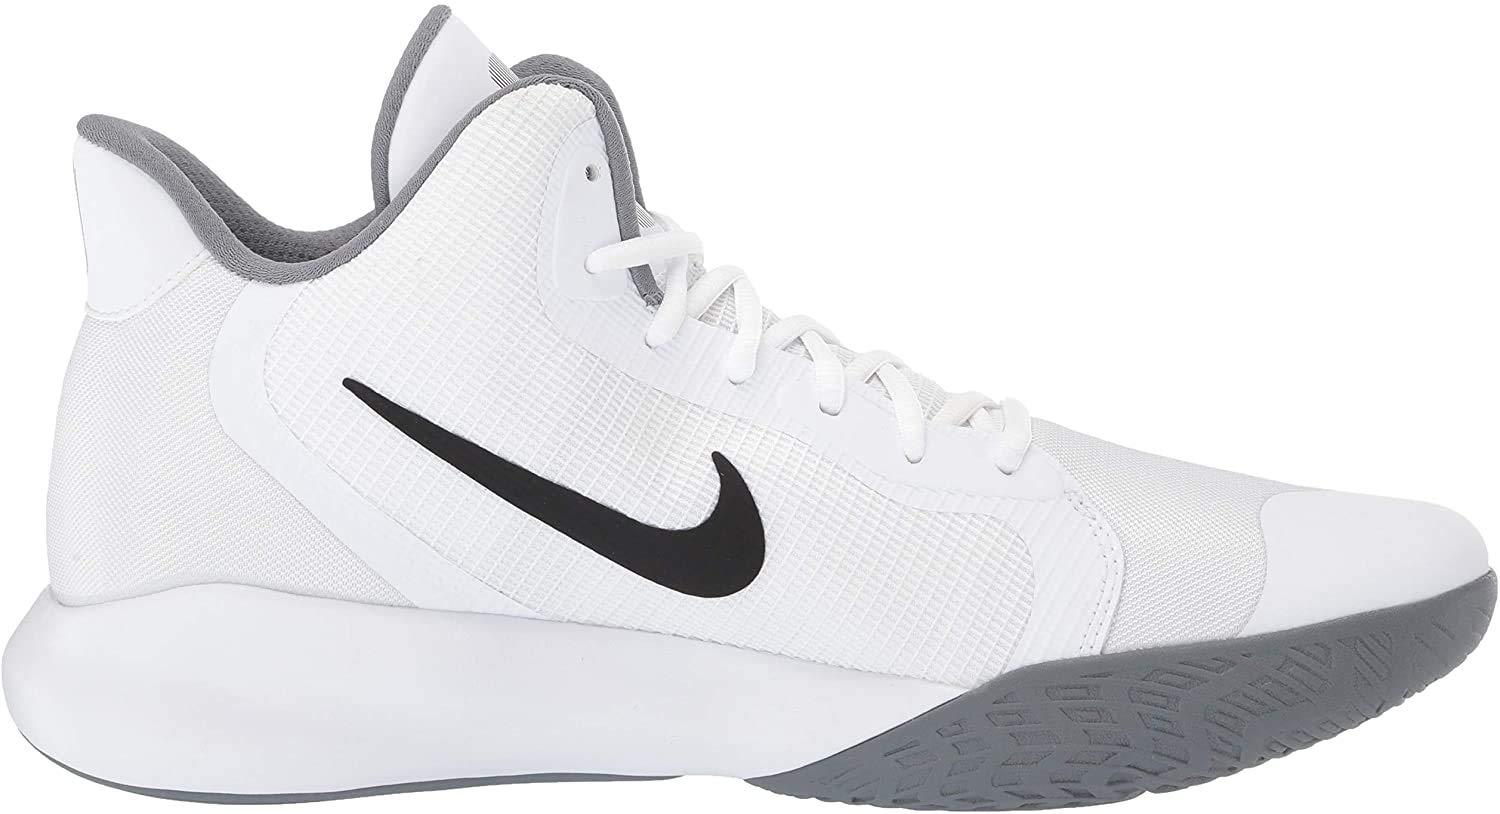 Nike Precision Iii Basketball Shoe in White/Black (White) - Save 47% | Lyst